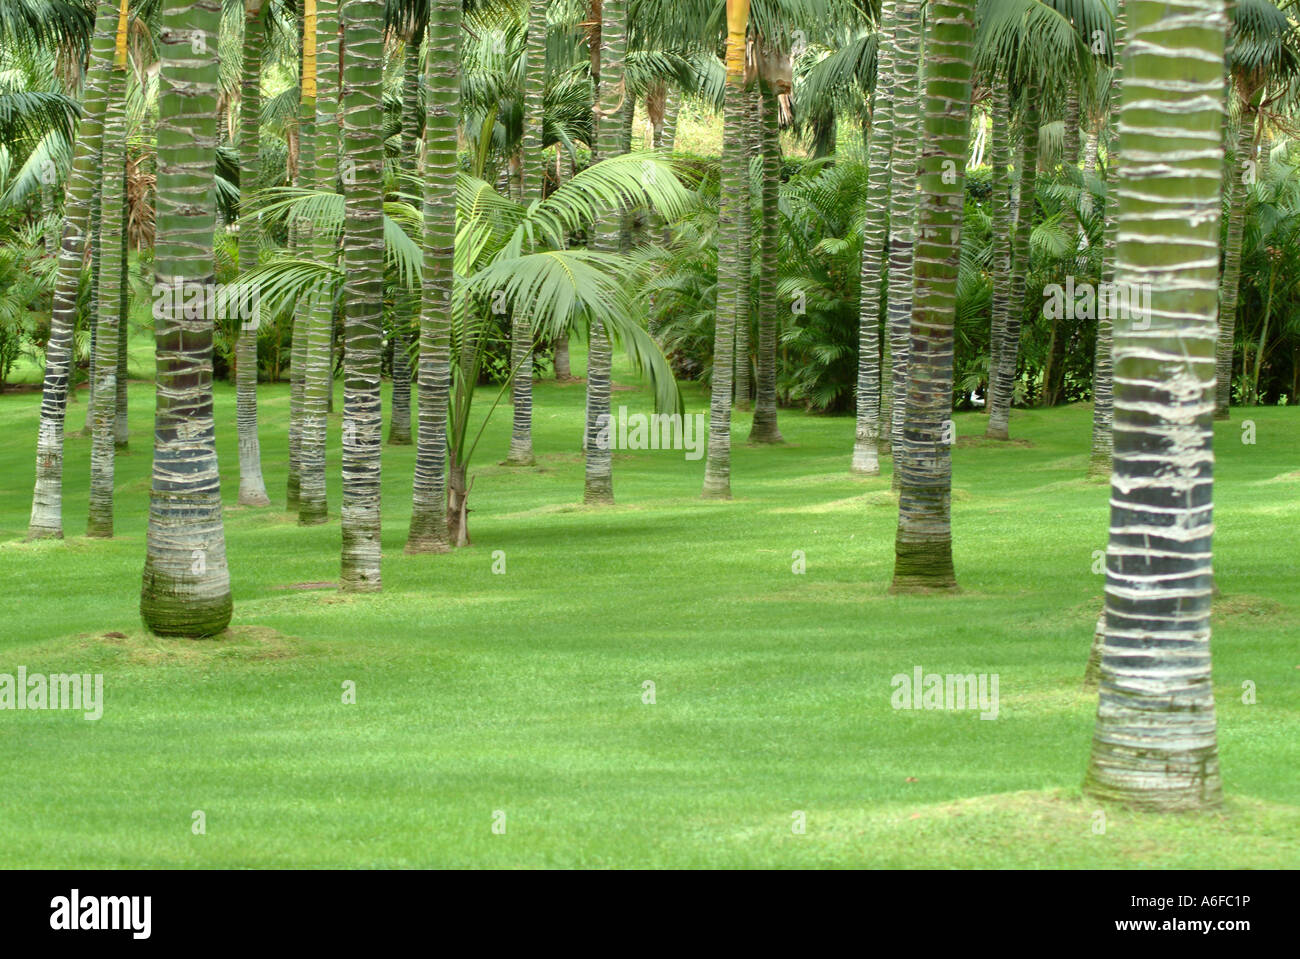 palmtrees on lawn Palmen auf Rasen im Park Stock Photo